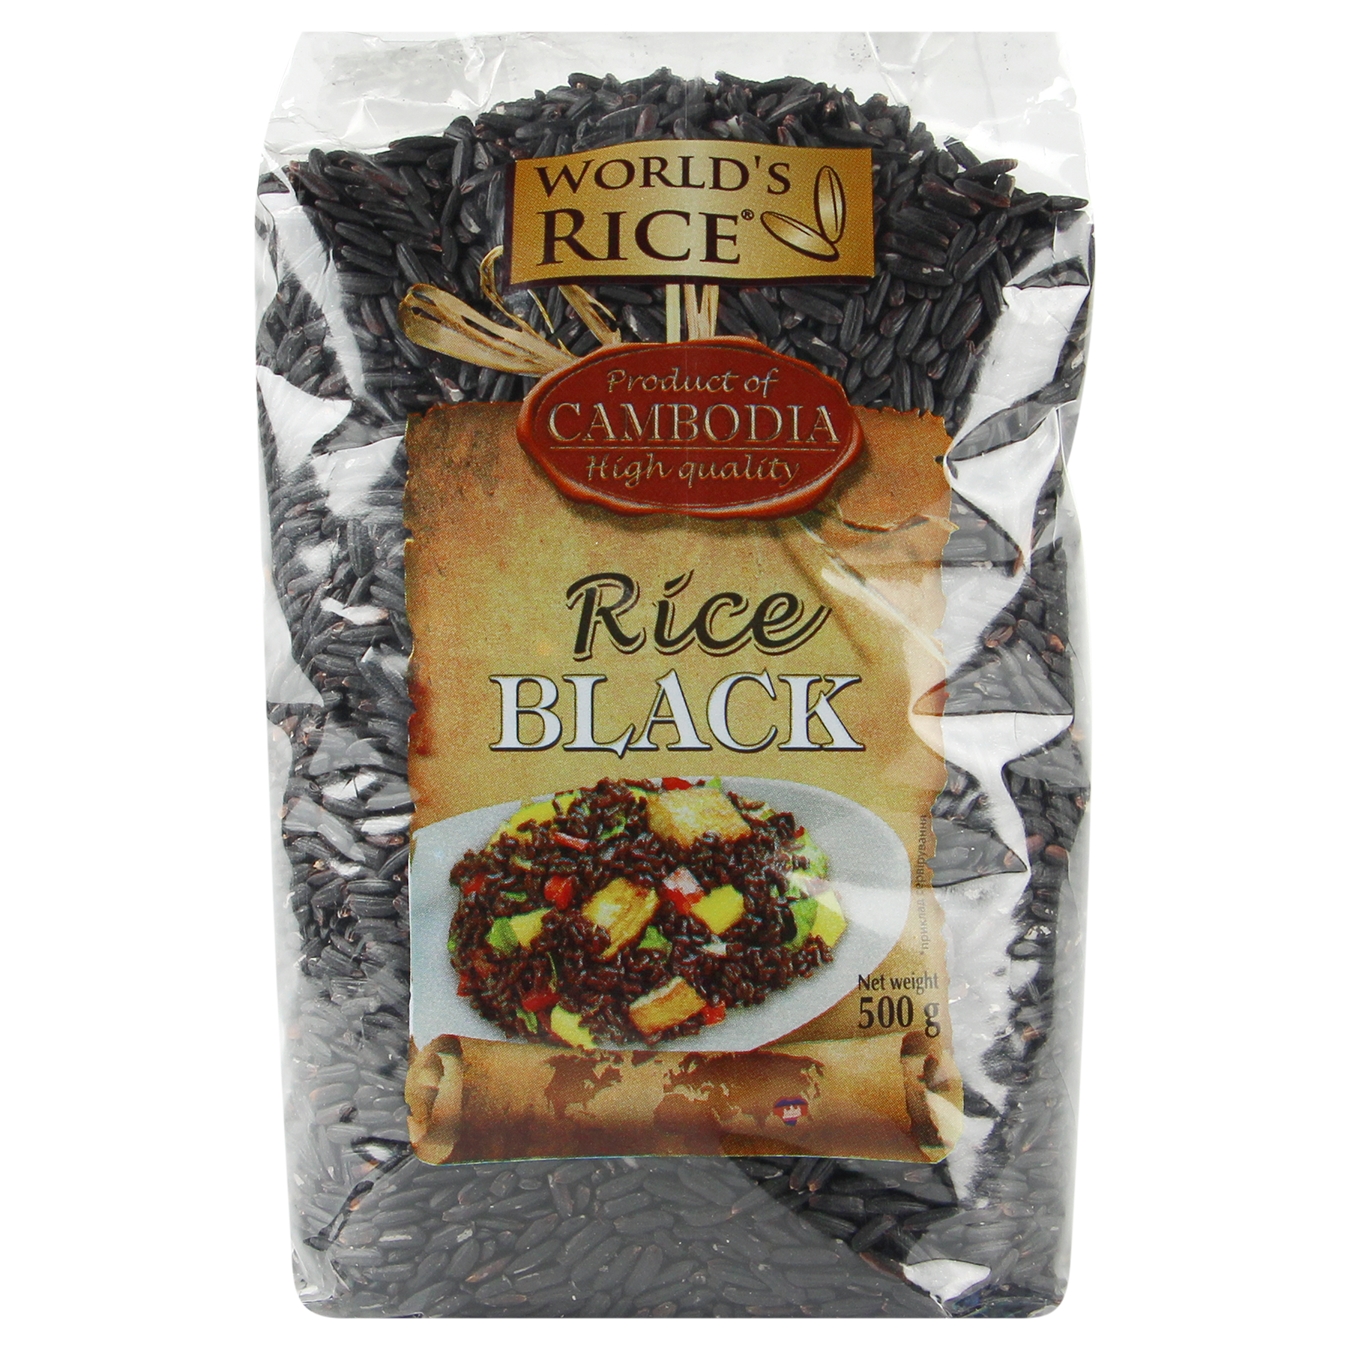 World's rice black long grain brown rice 500g